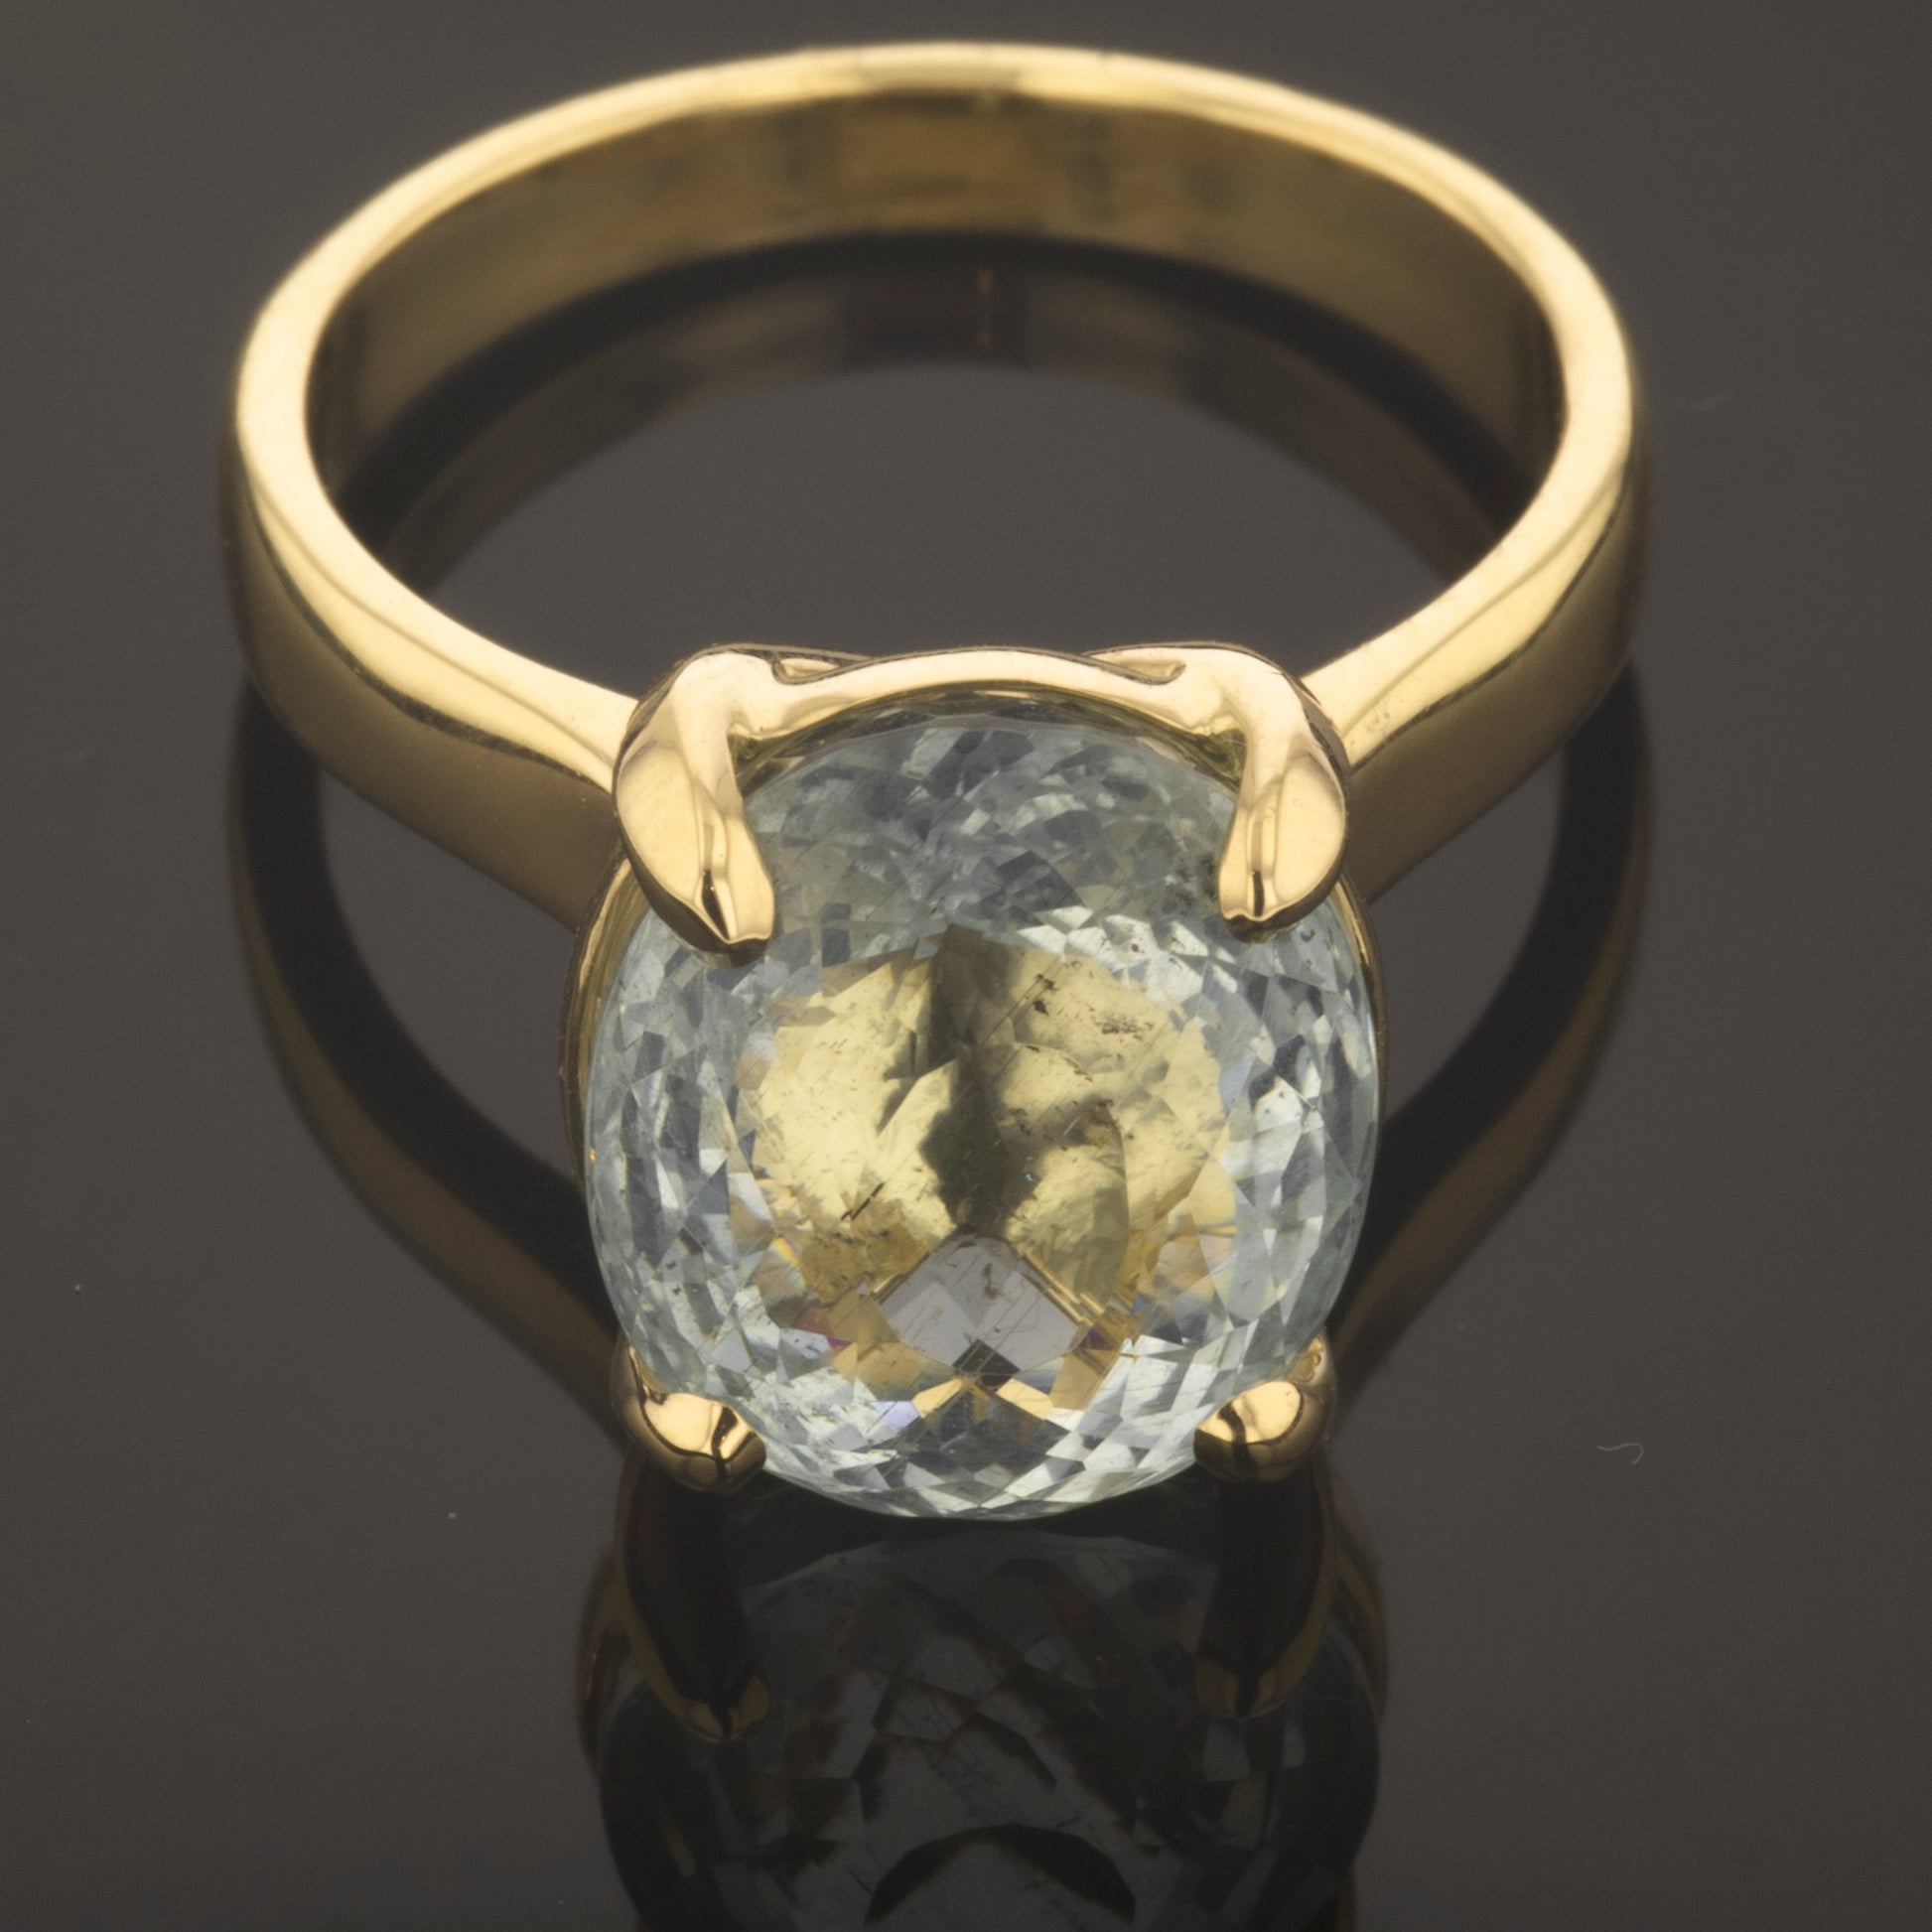 aquamarine ring made by hand